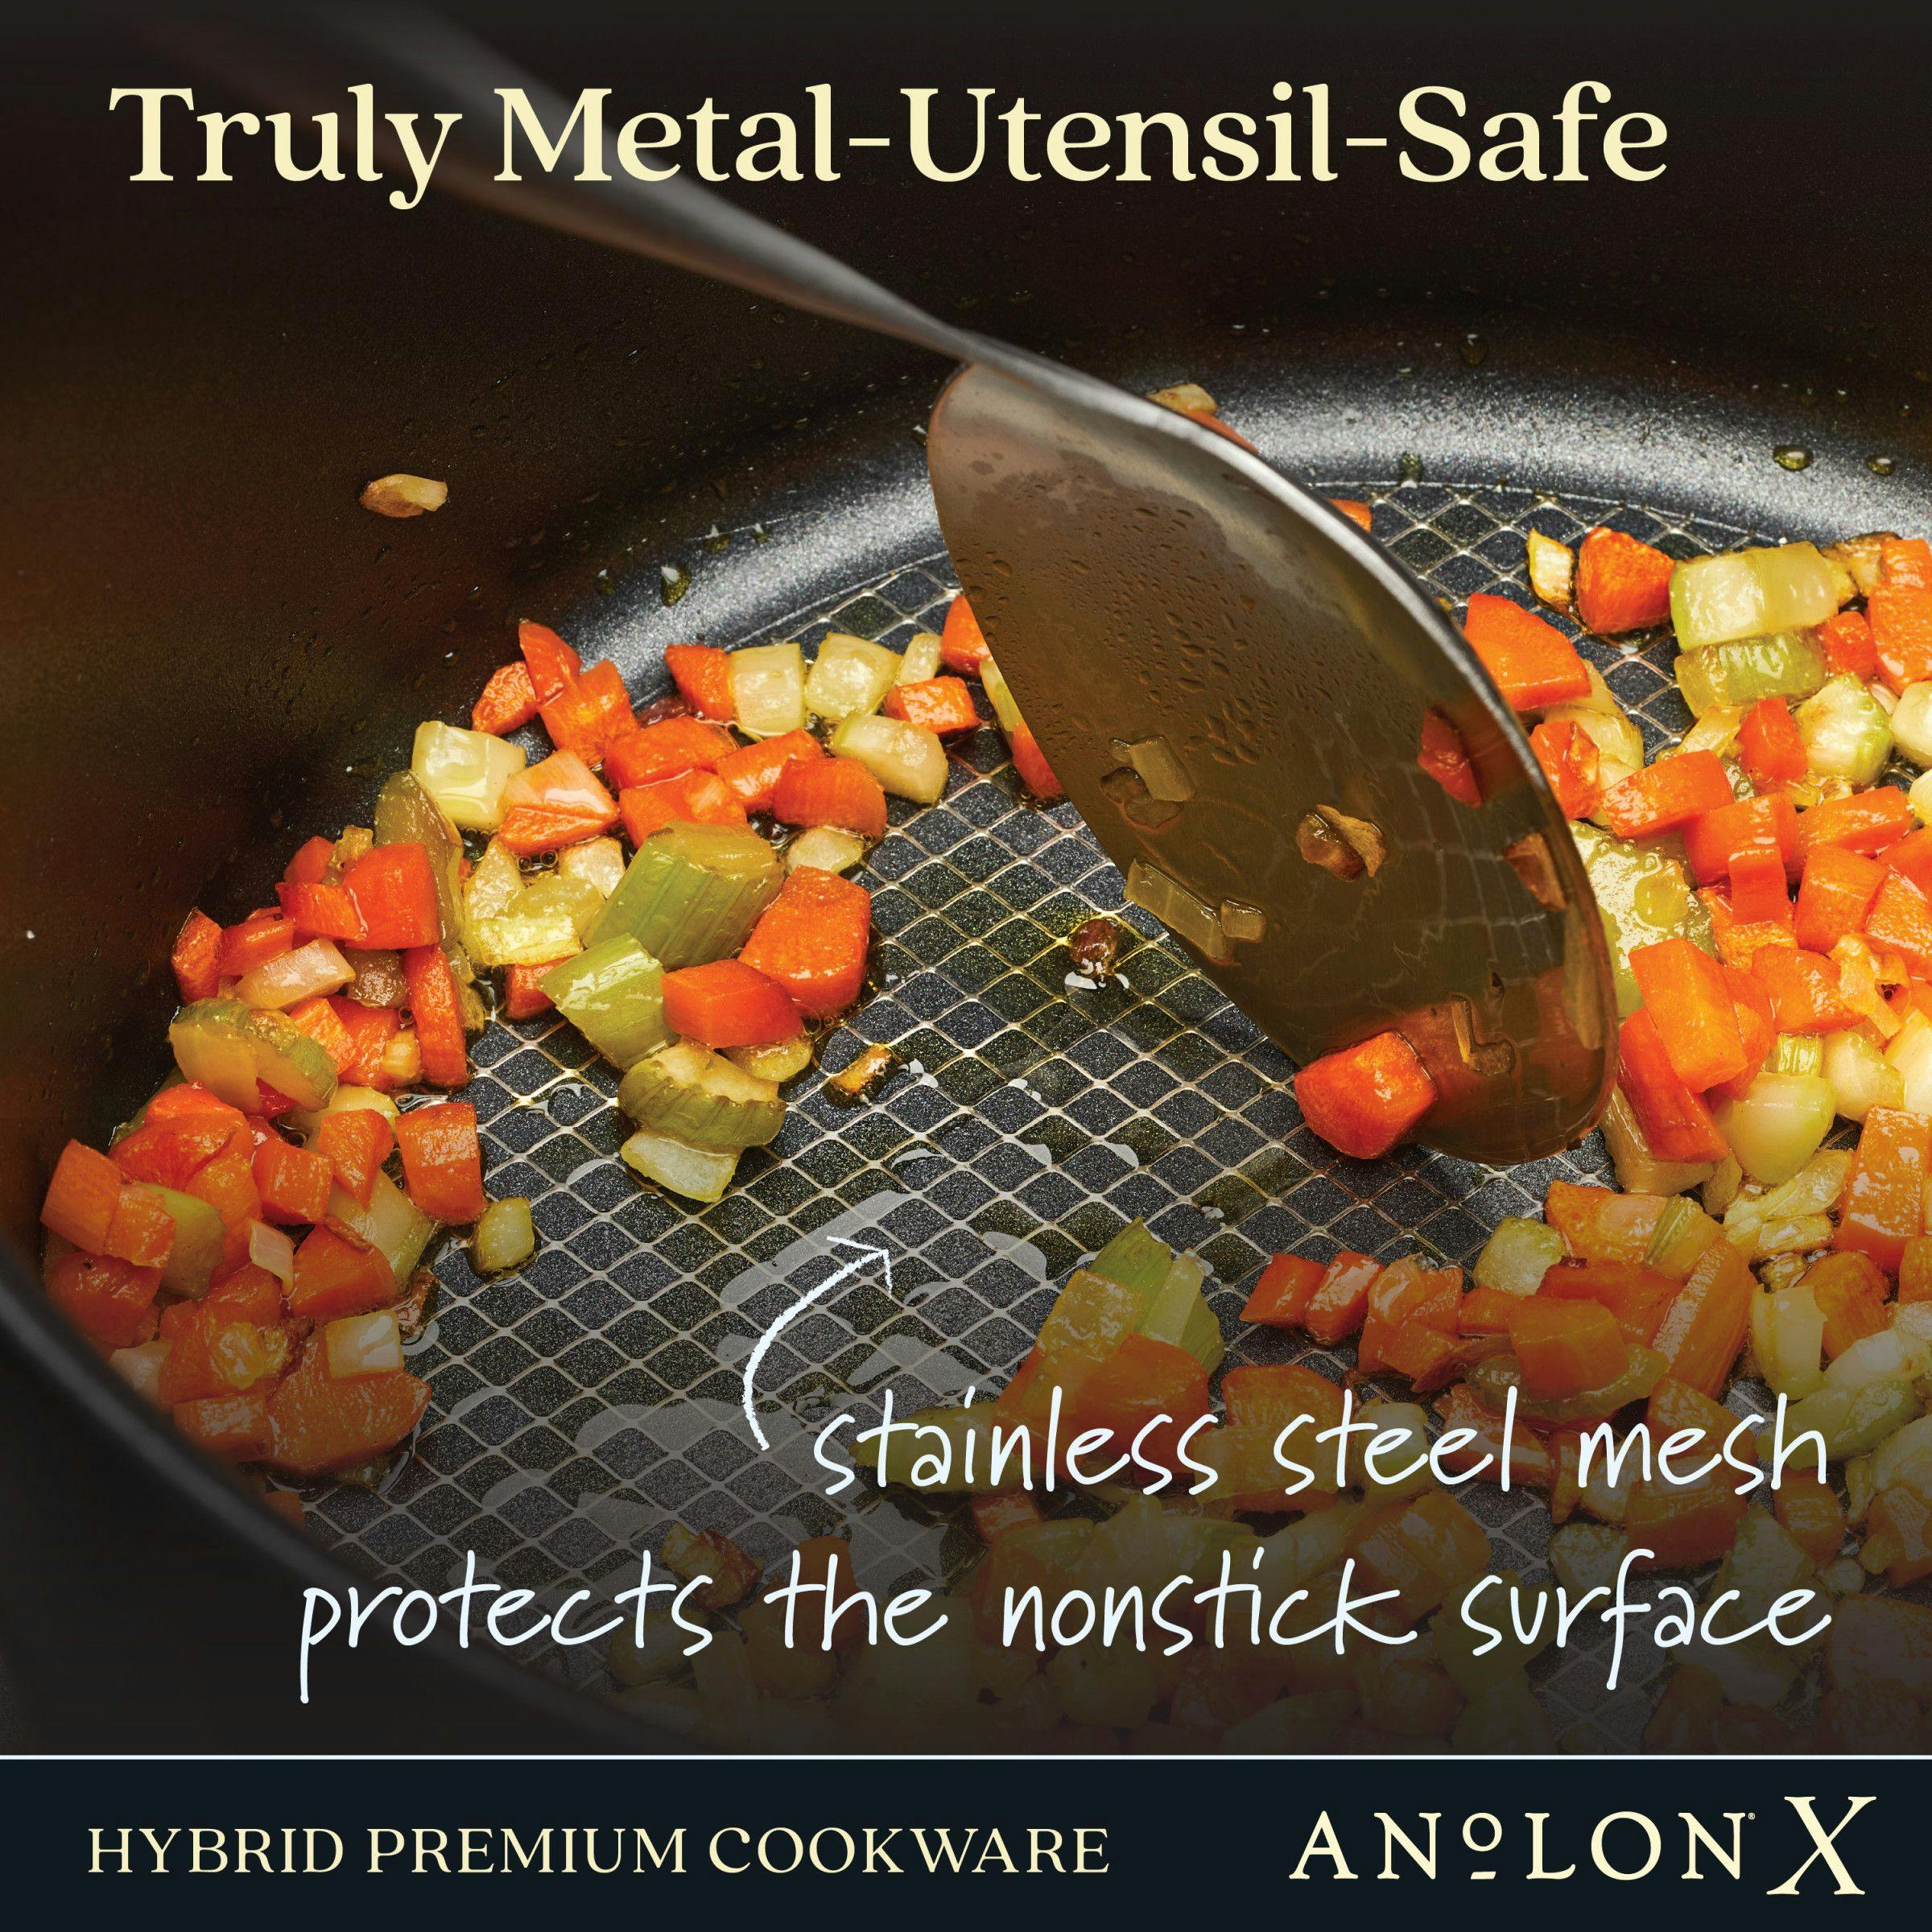 Anolon X Hybrid Nonstick Induction Saucepan With Lid, 3-Quart, Super Dark Gray